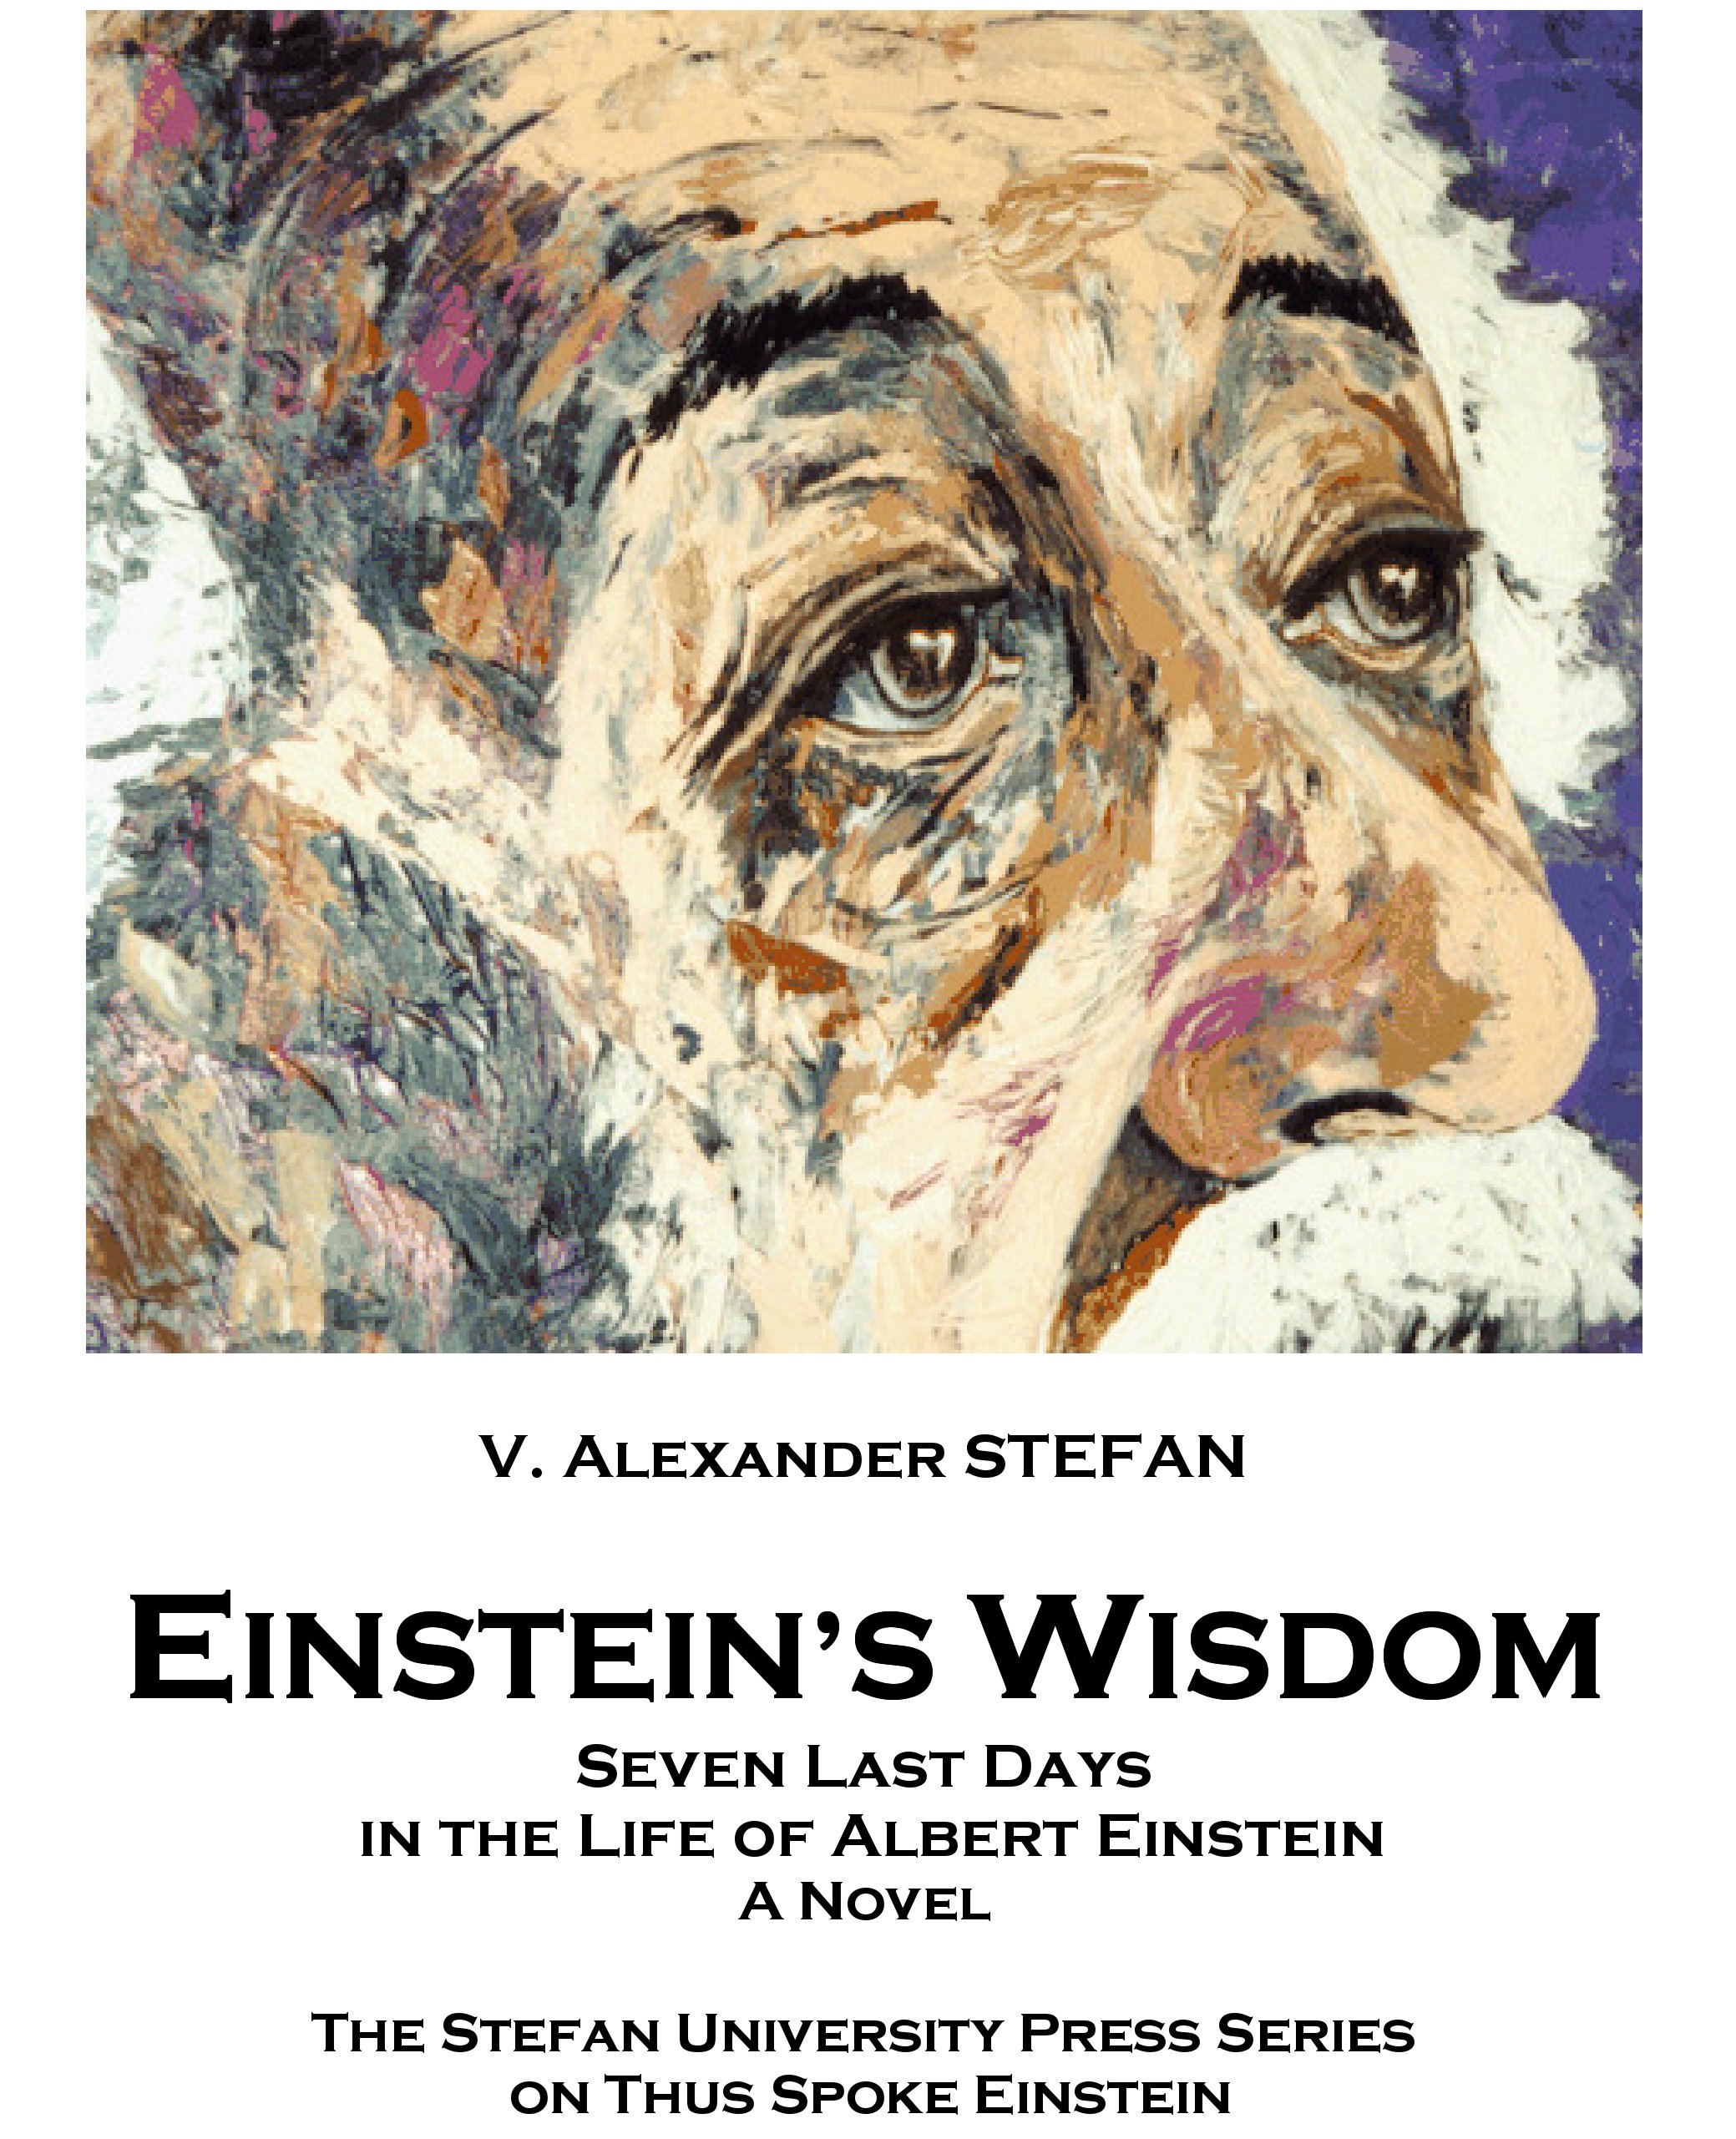 EINSTEIN'S WISDOM, a historical novel by V Alexander Stefan